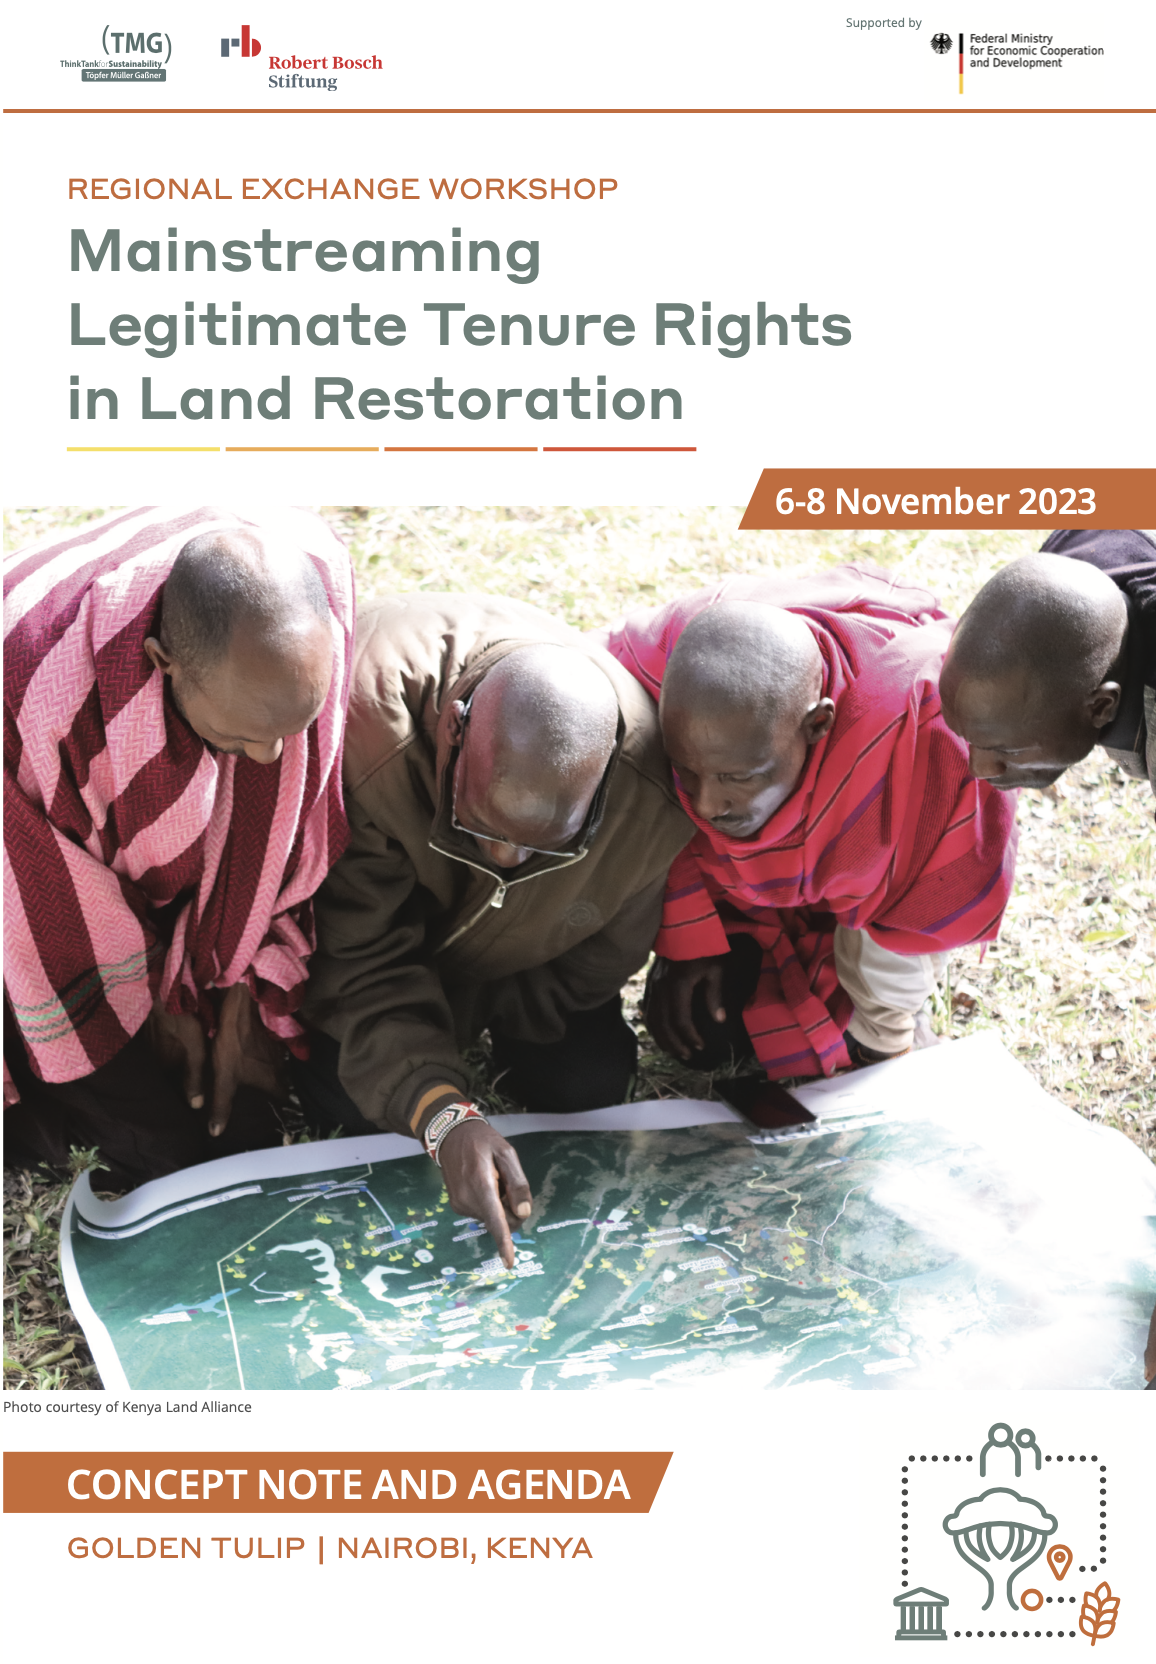 Programme: Regional Exchange Workshop on Mainstreaming Legitimate Tenure Rights in Land Restoration